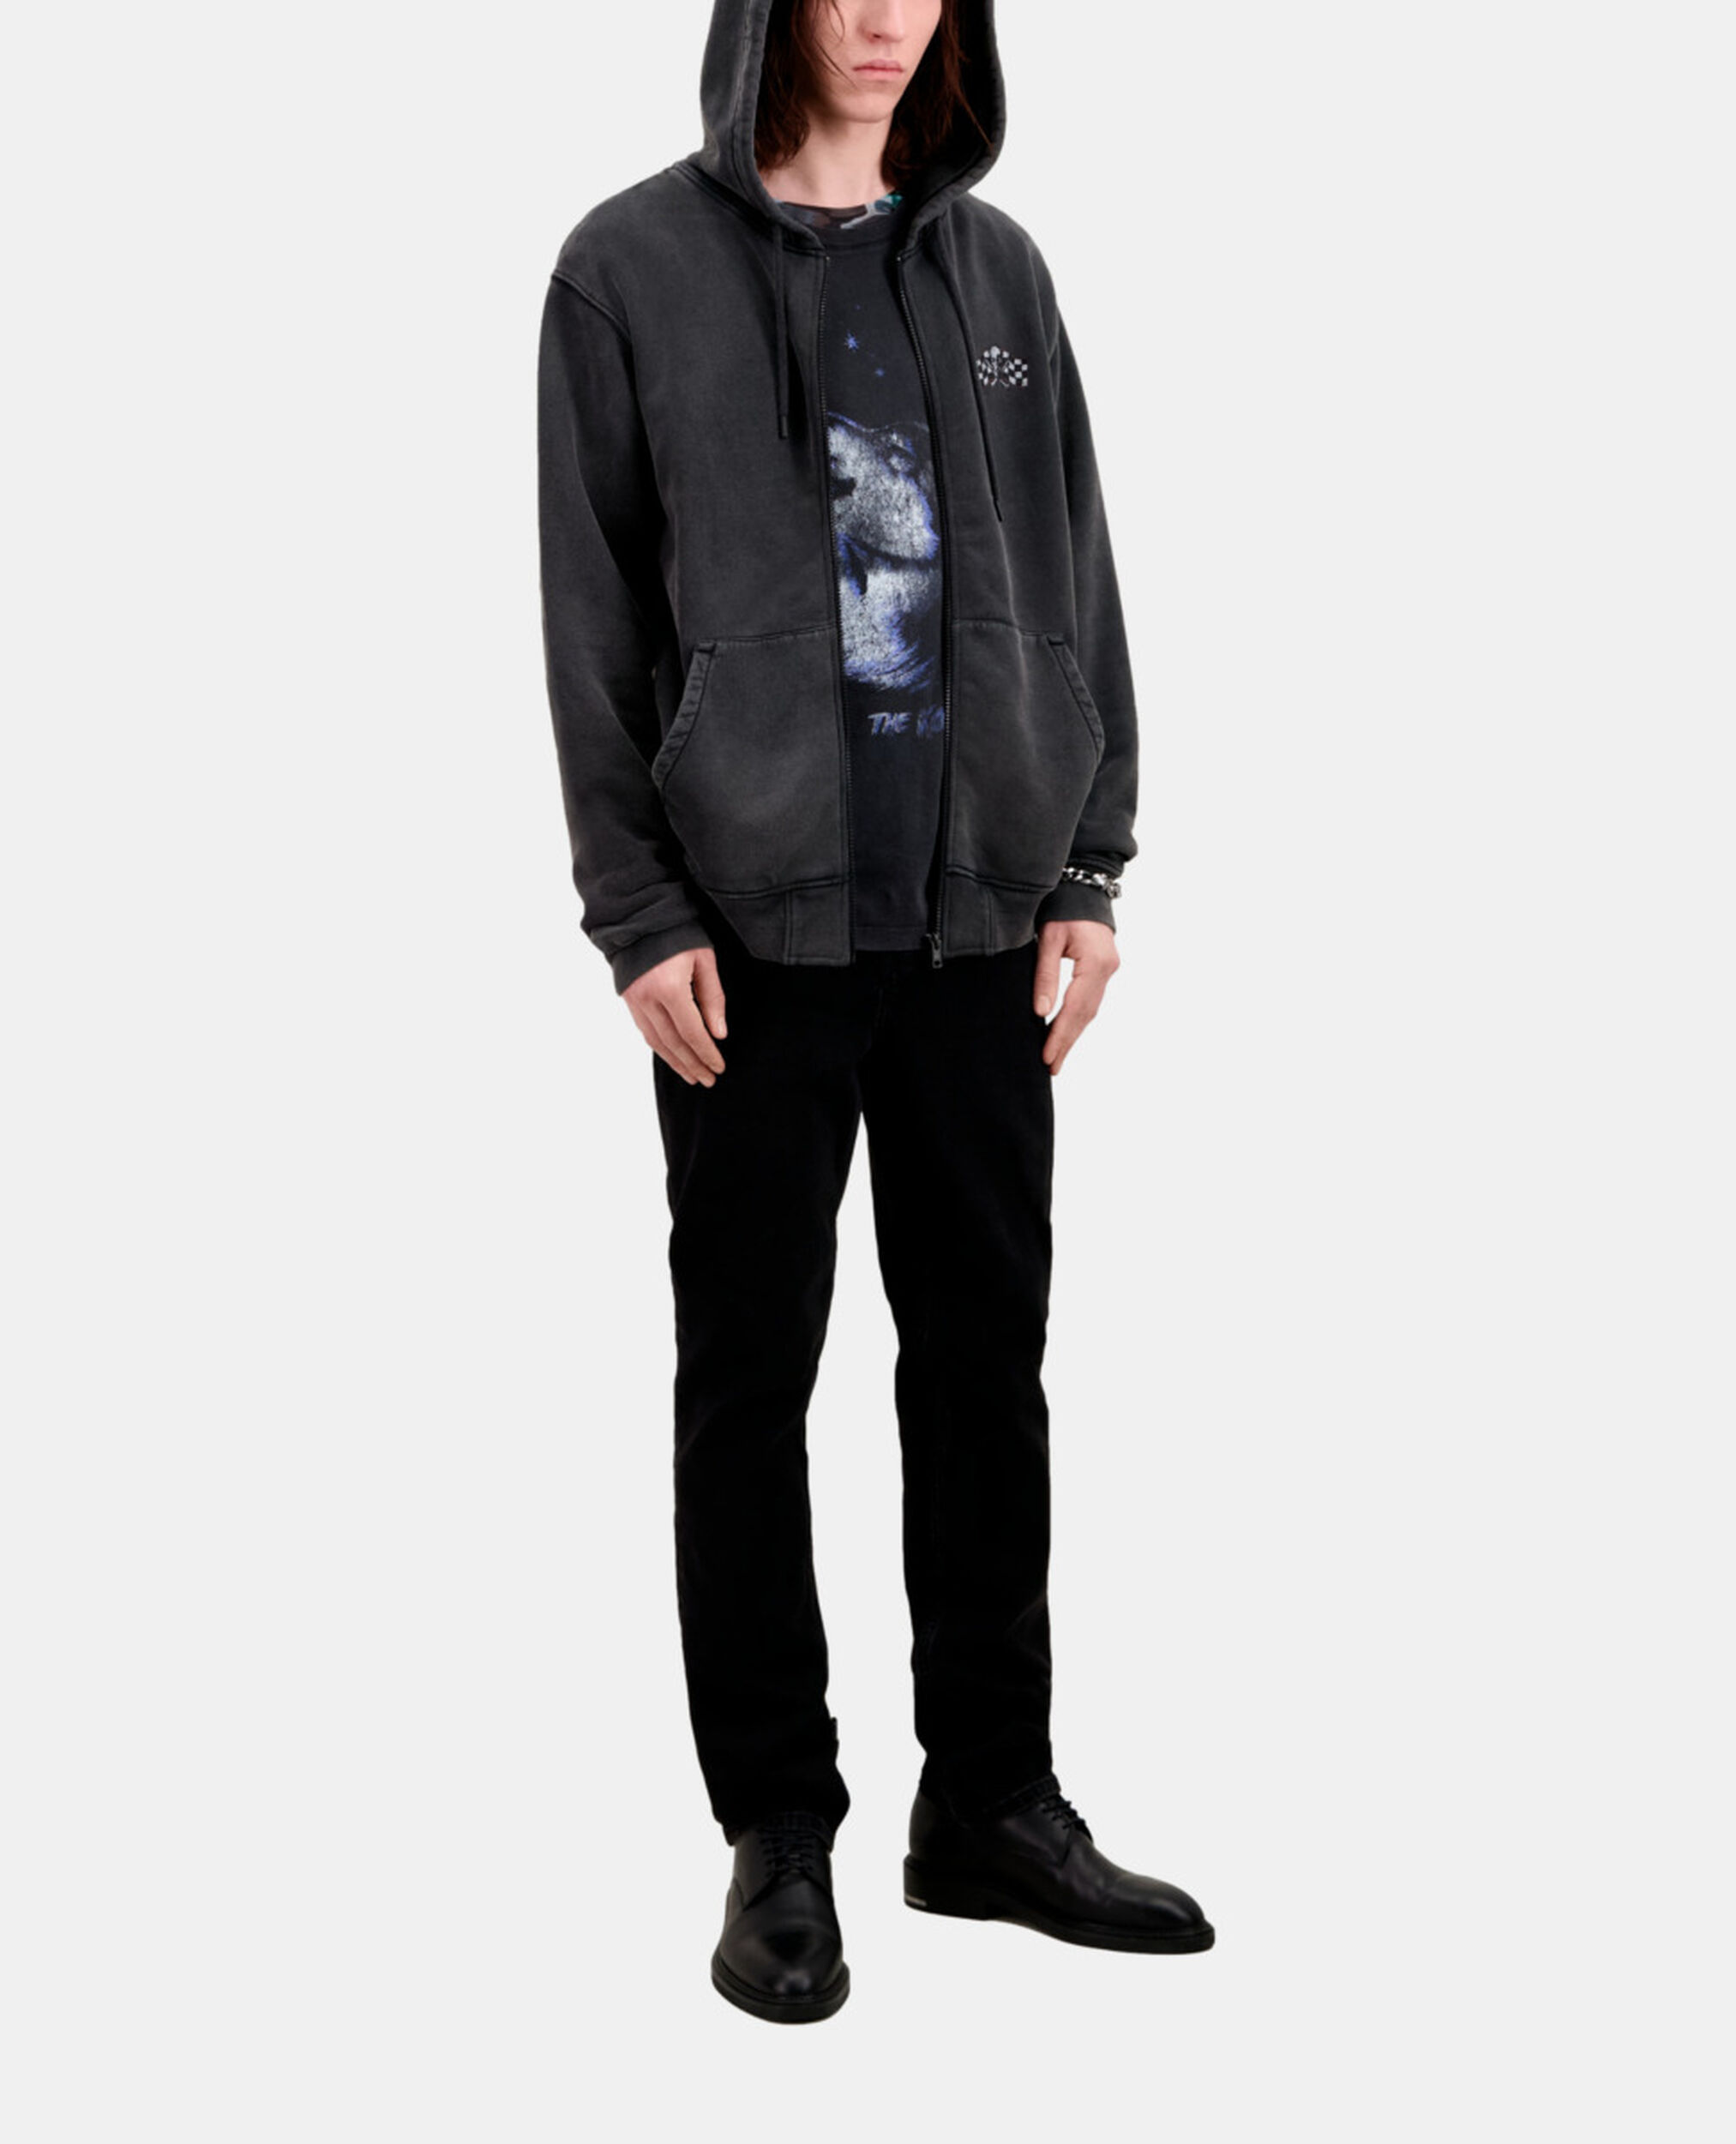 Herren Schwarzes Kapuzensweatshirt mit Siebdruck, BLACK WASHED, hi-res image number null